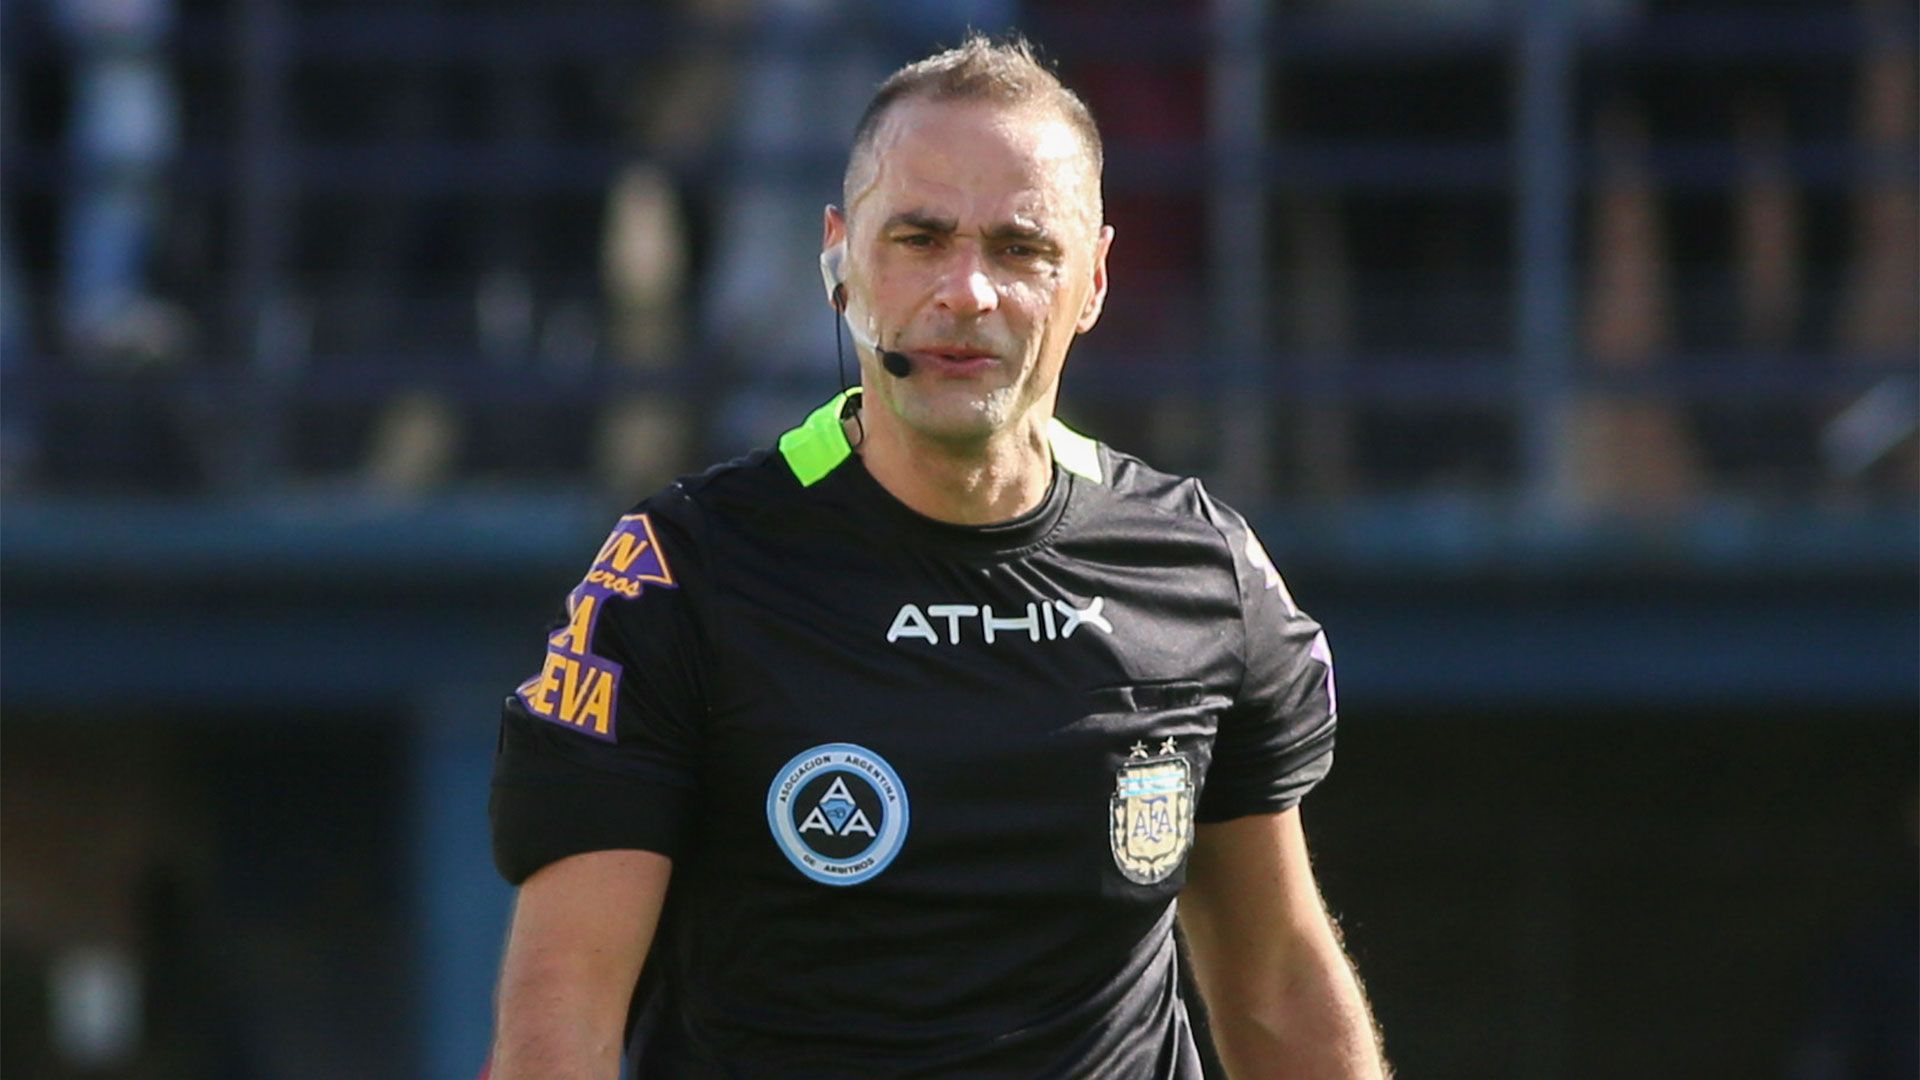 La AFA expulsó a un árbitro del futbol argentino por un escandaloso fallo